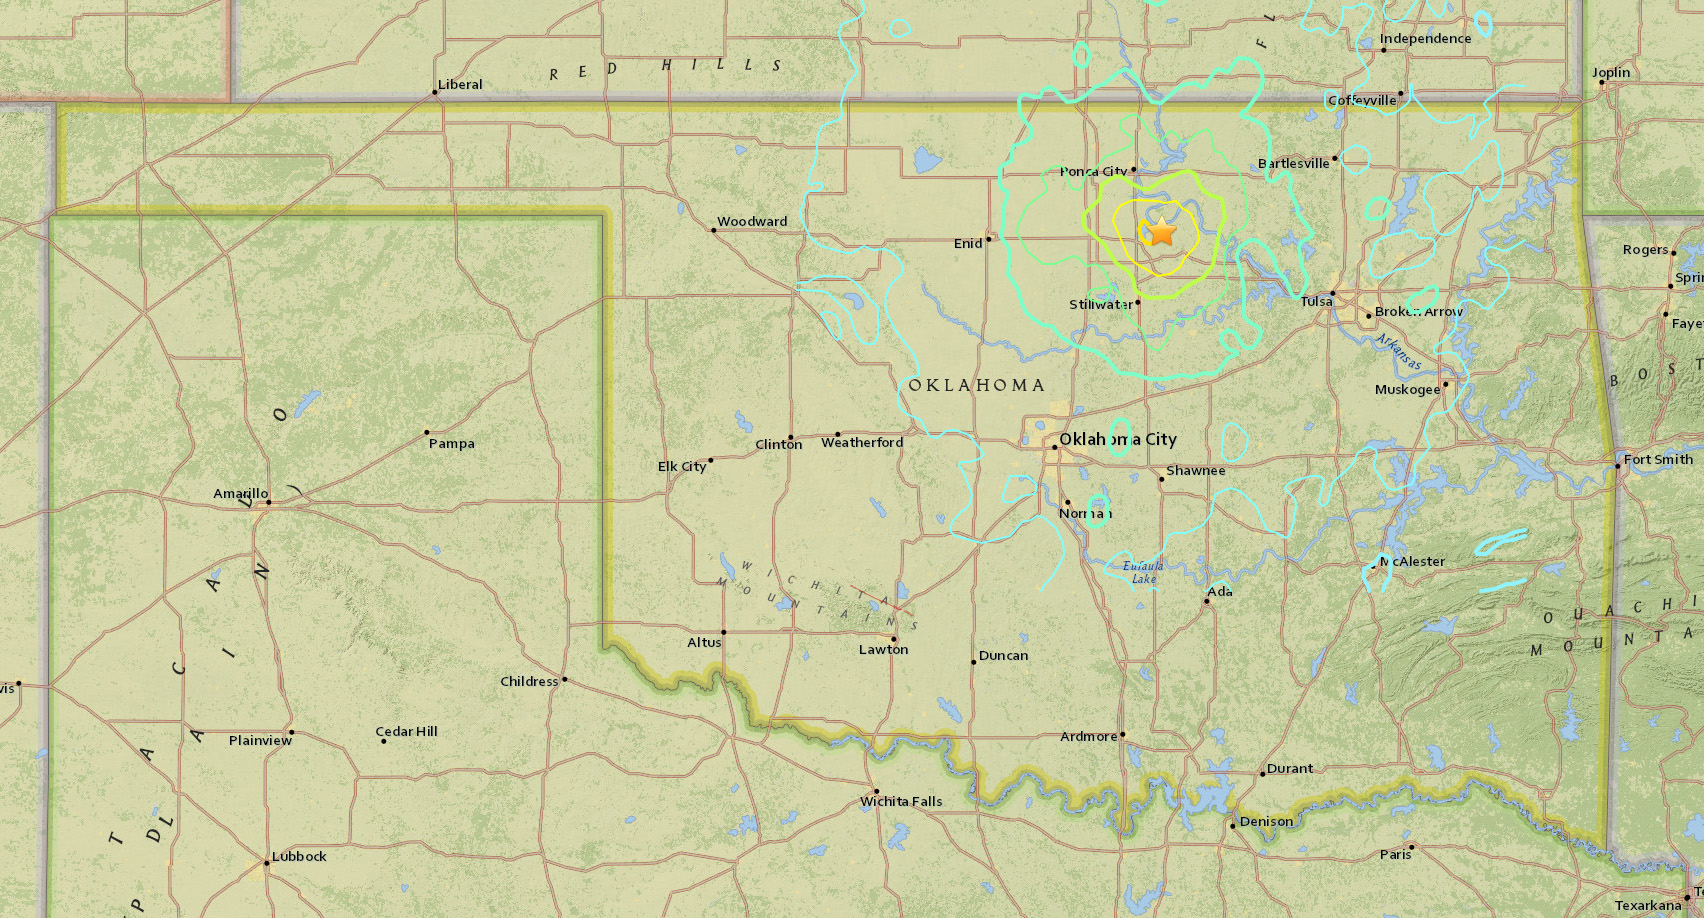 Magnitude 5.6 earthquake in Oklahoma ties biggest area has seen | Ars Technica ...